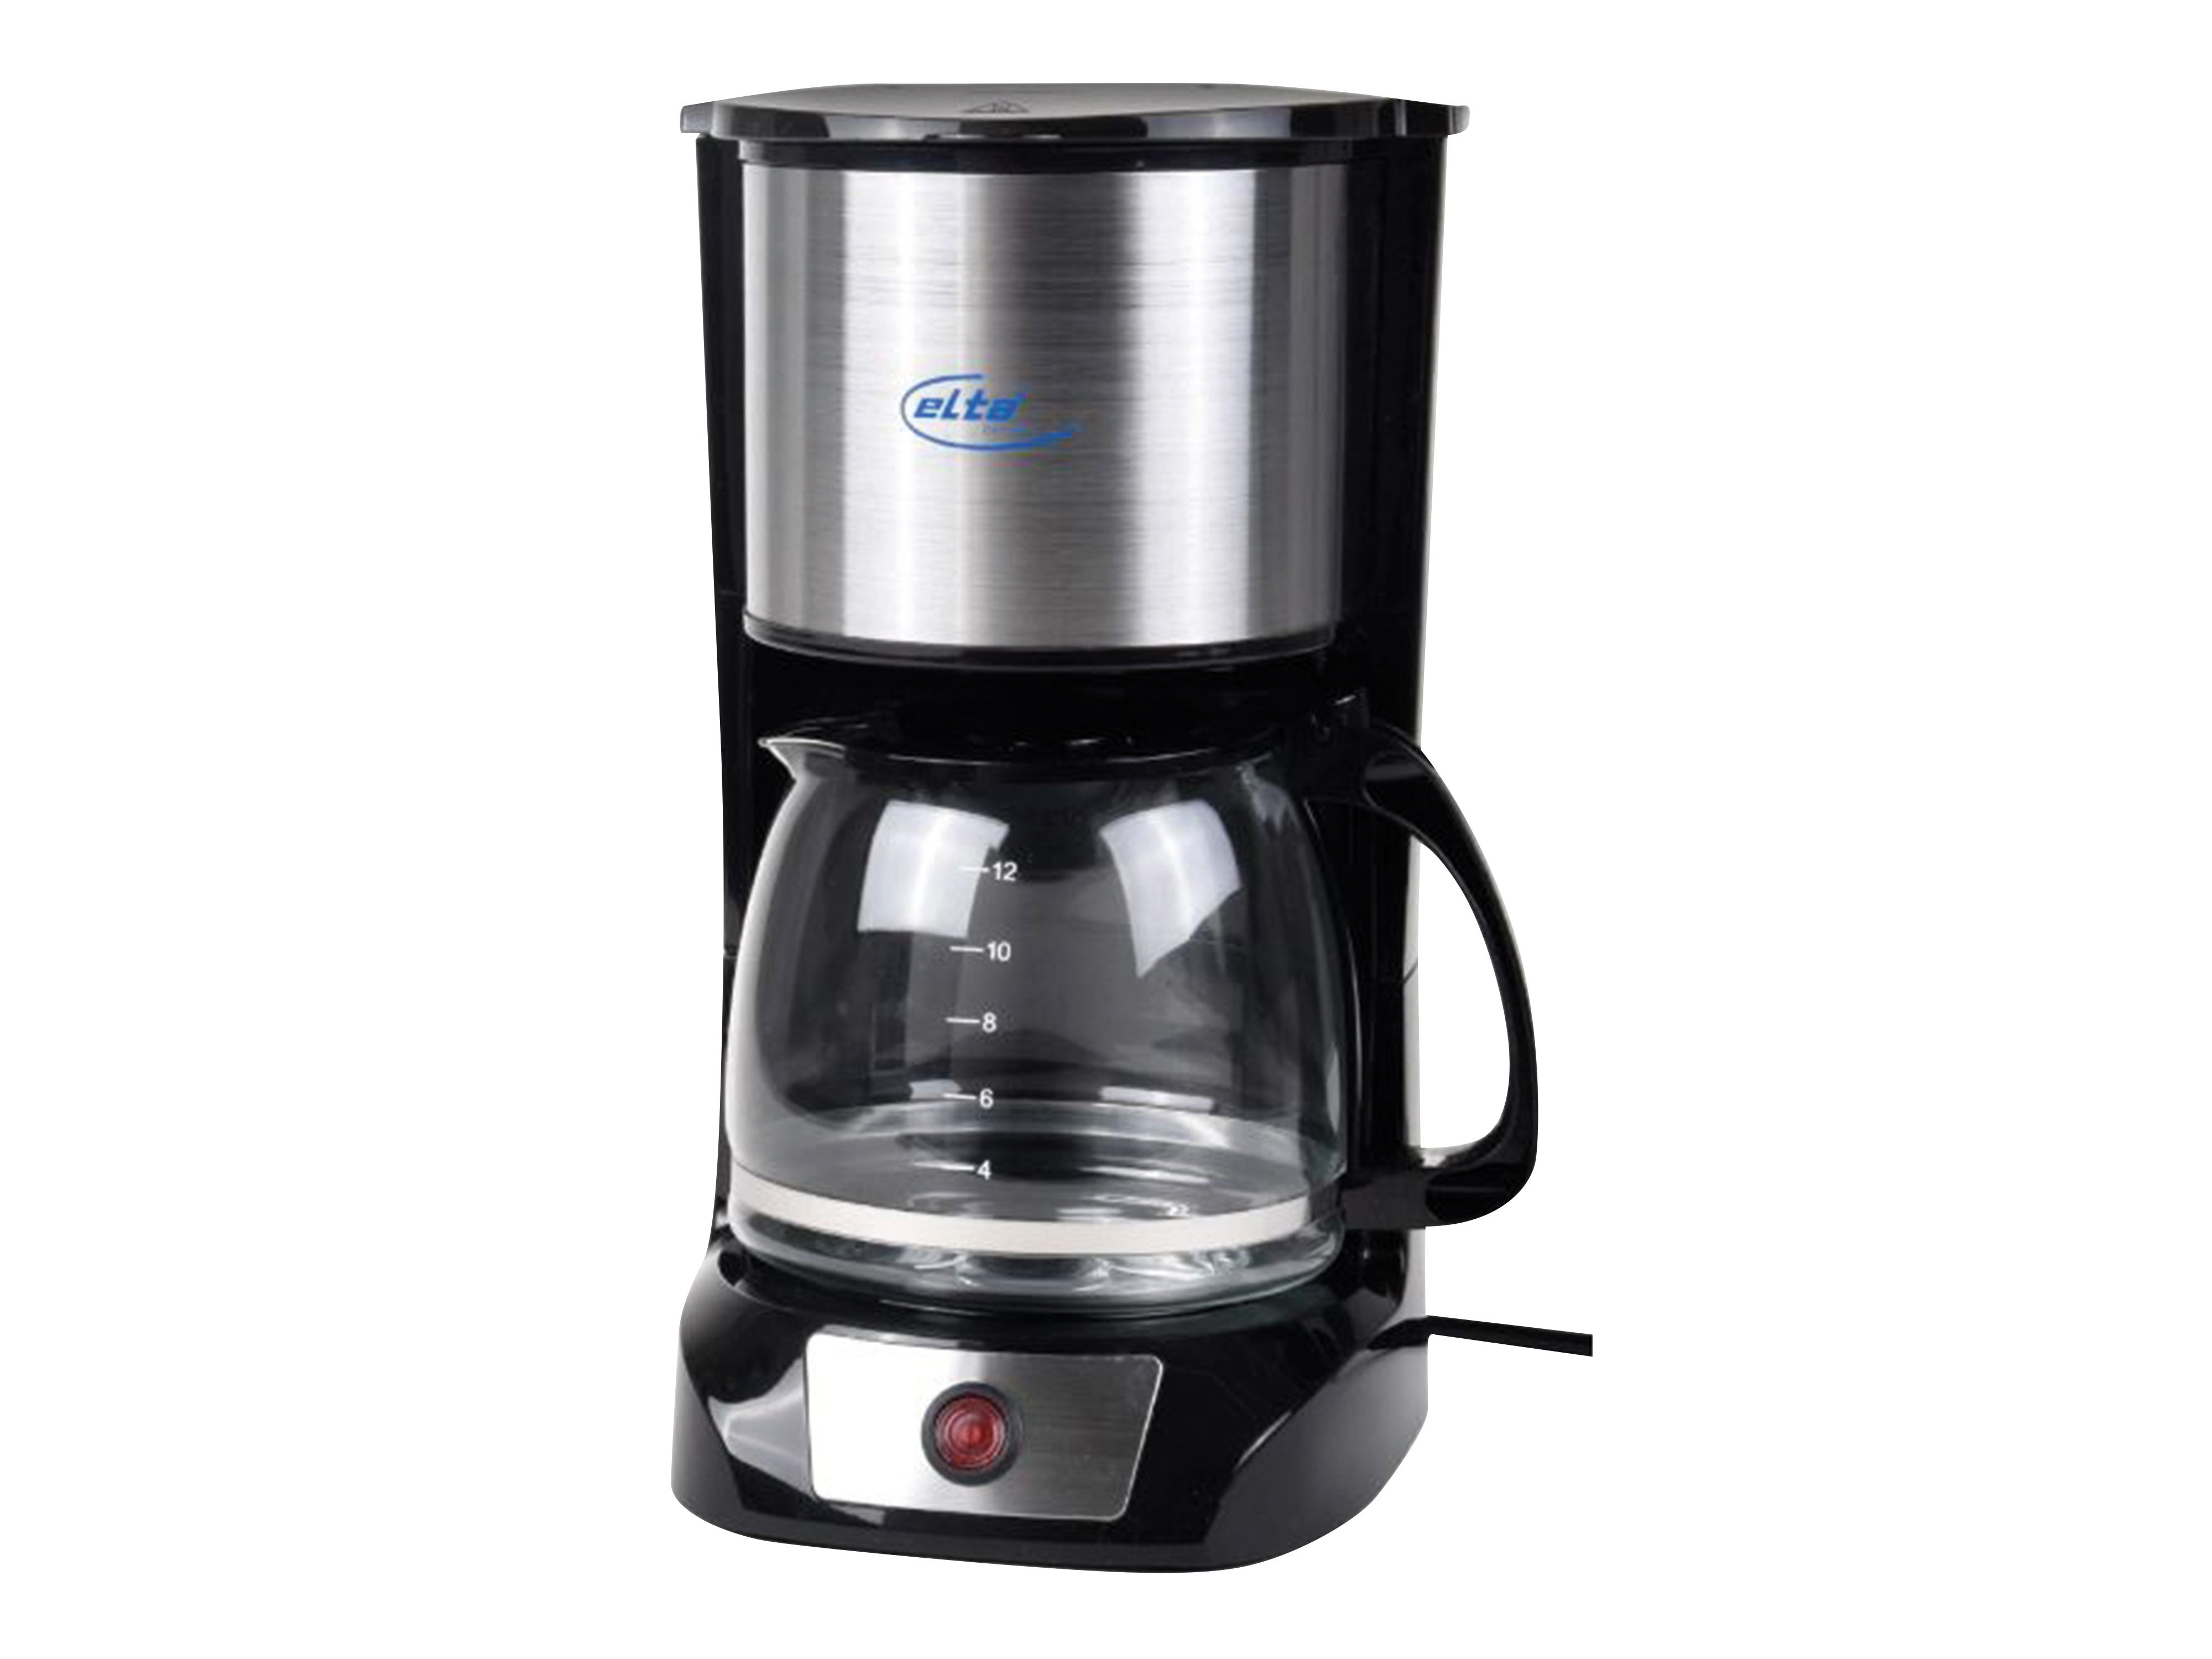 ELTA Kaffeemaschine KME-1000.2, 1,5 L, 800 W, edelstahl